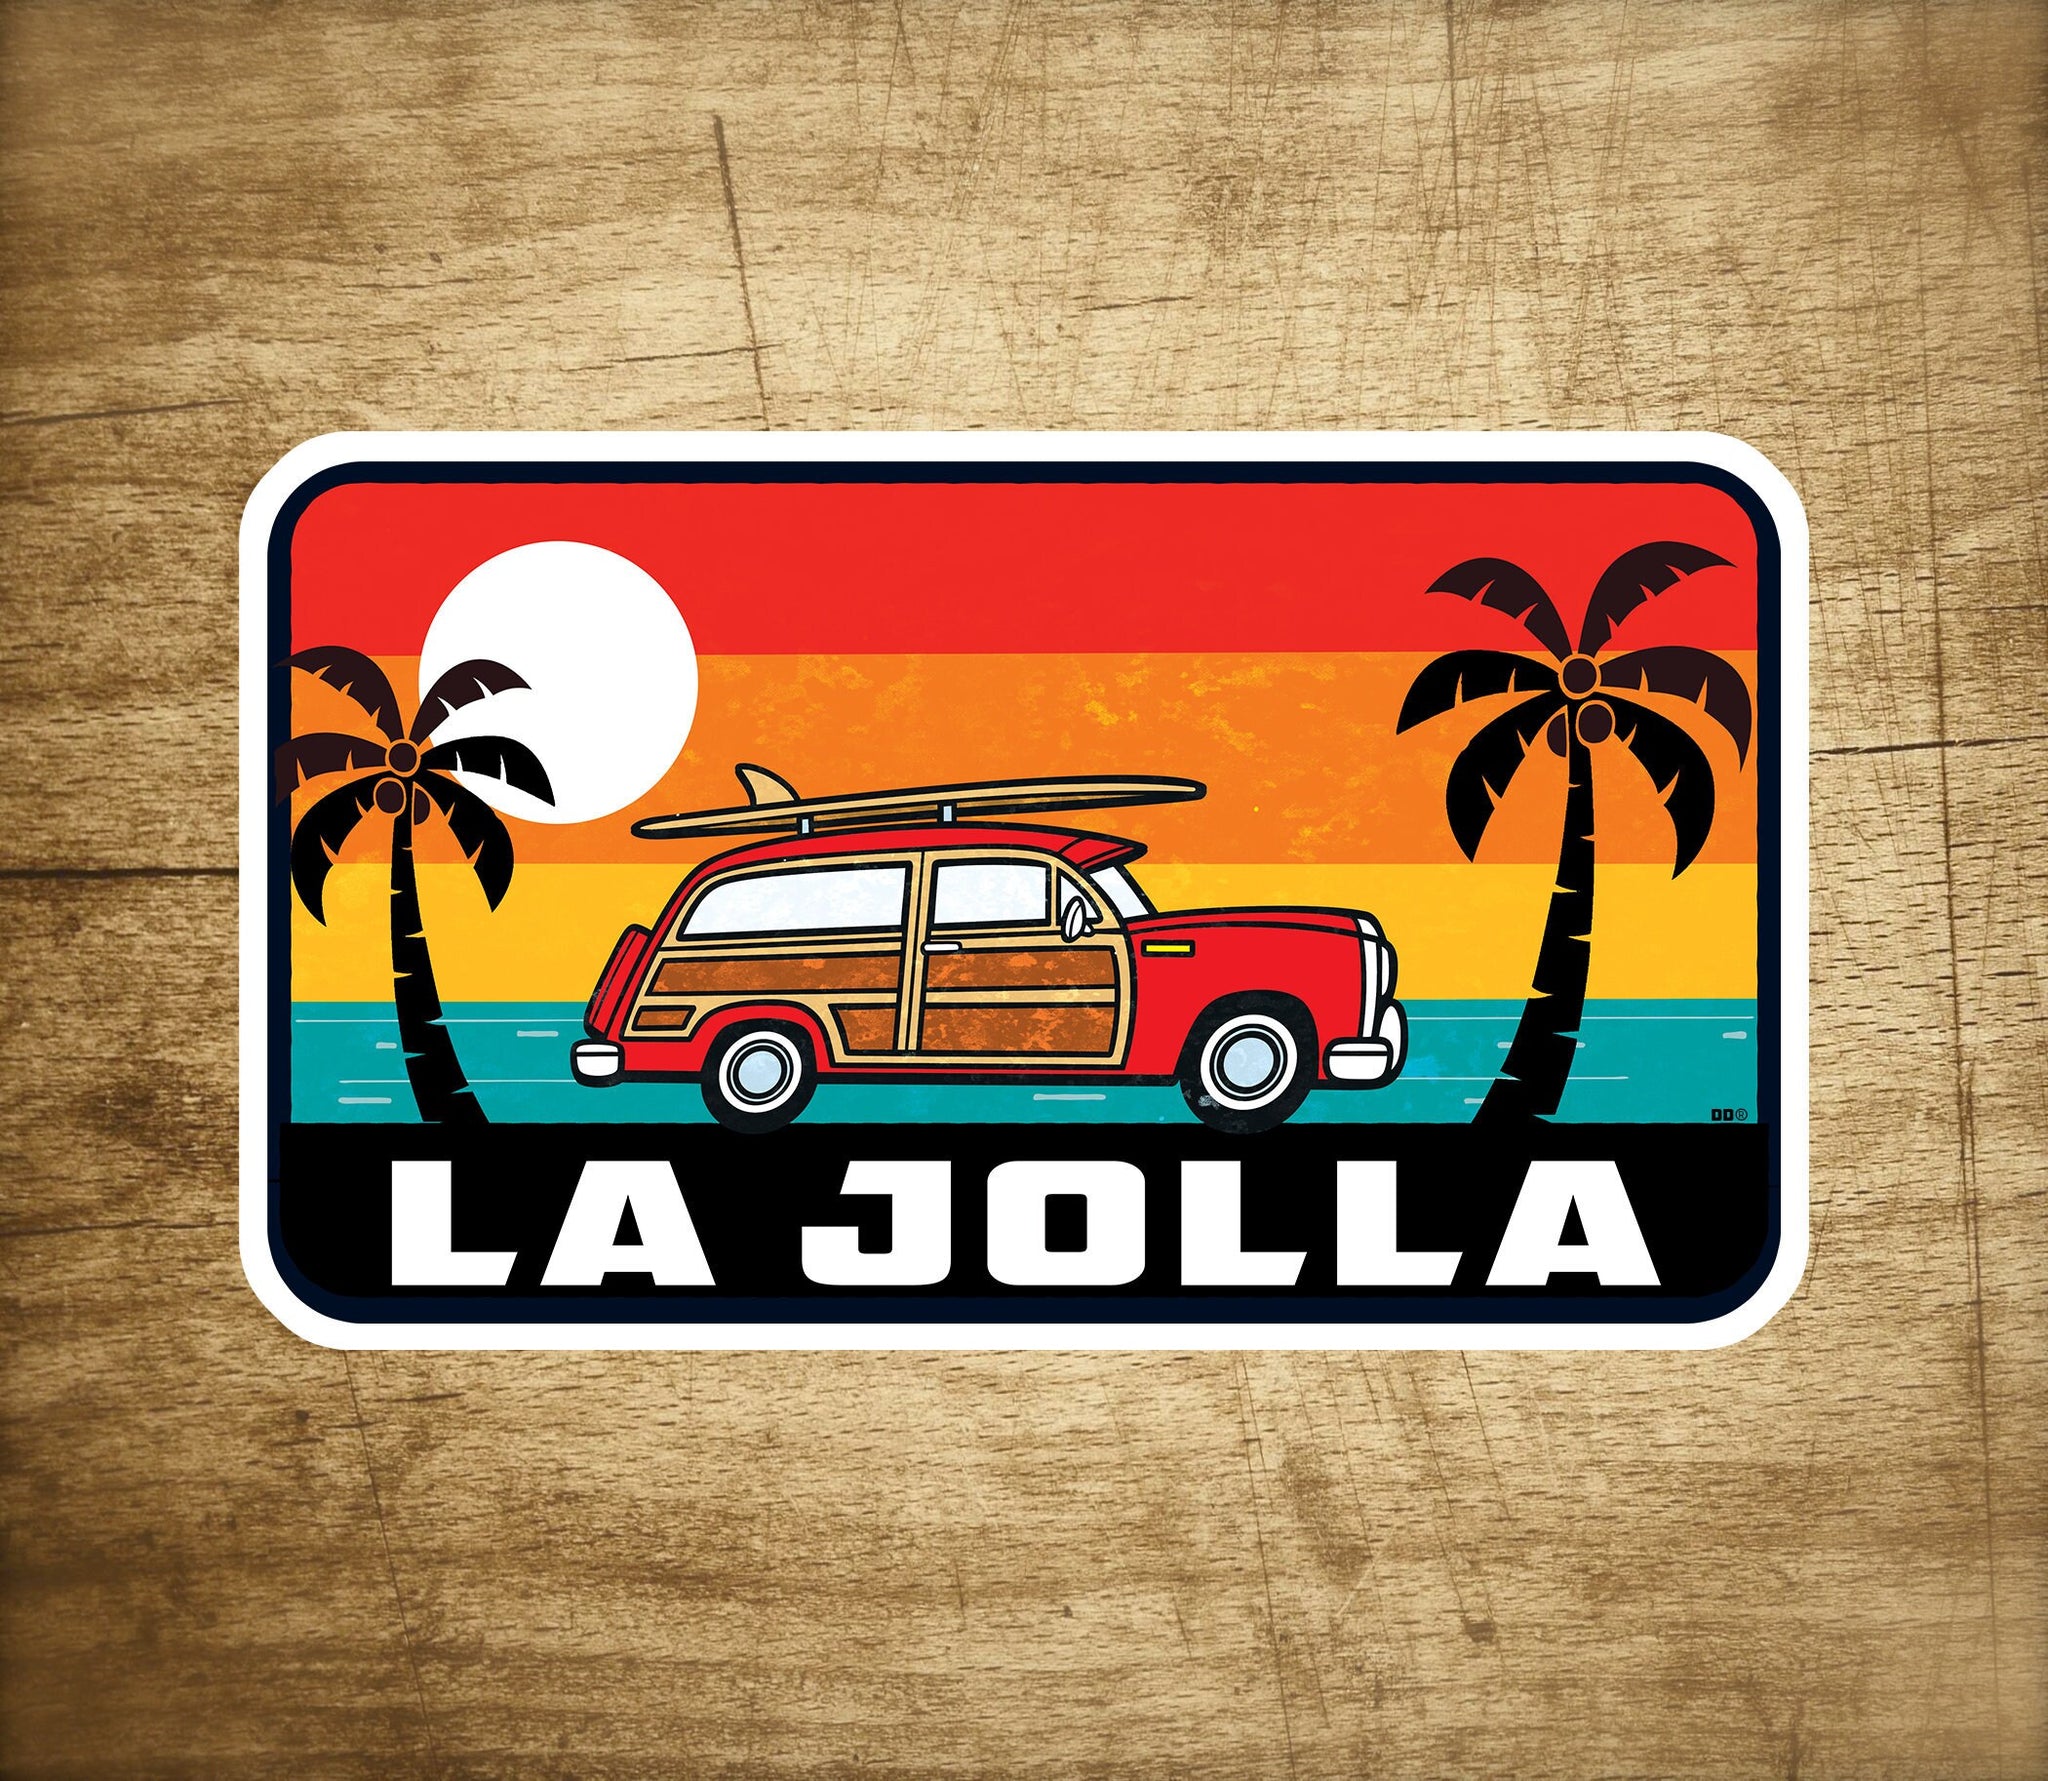 La Jolla California Decal Sticker 3.75" X 2.25" Surf San Diego Surfing